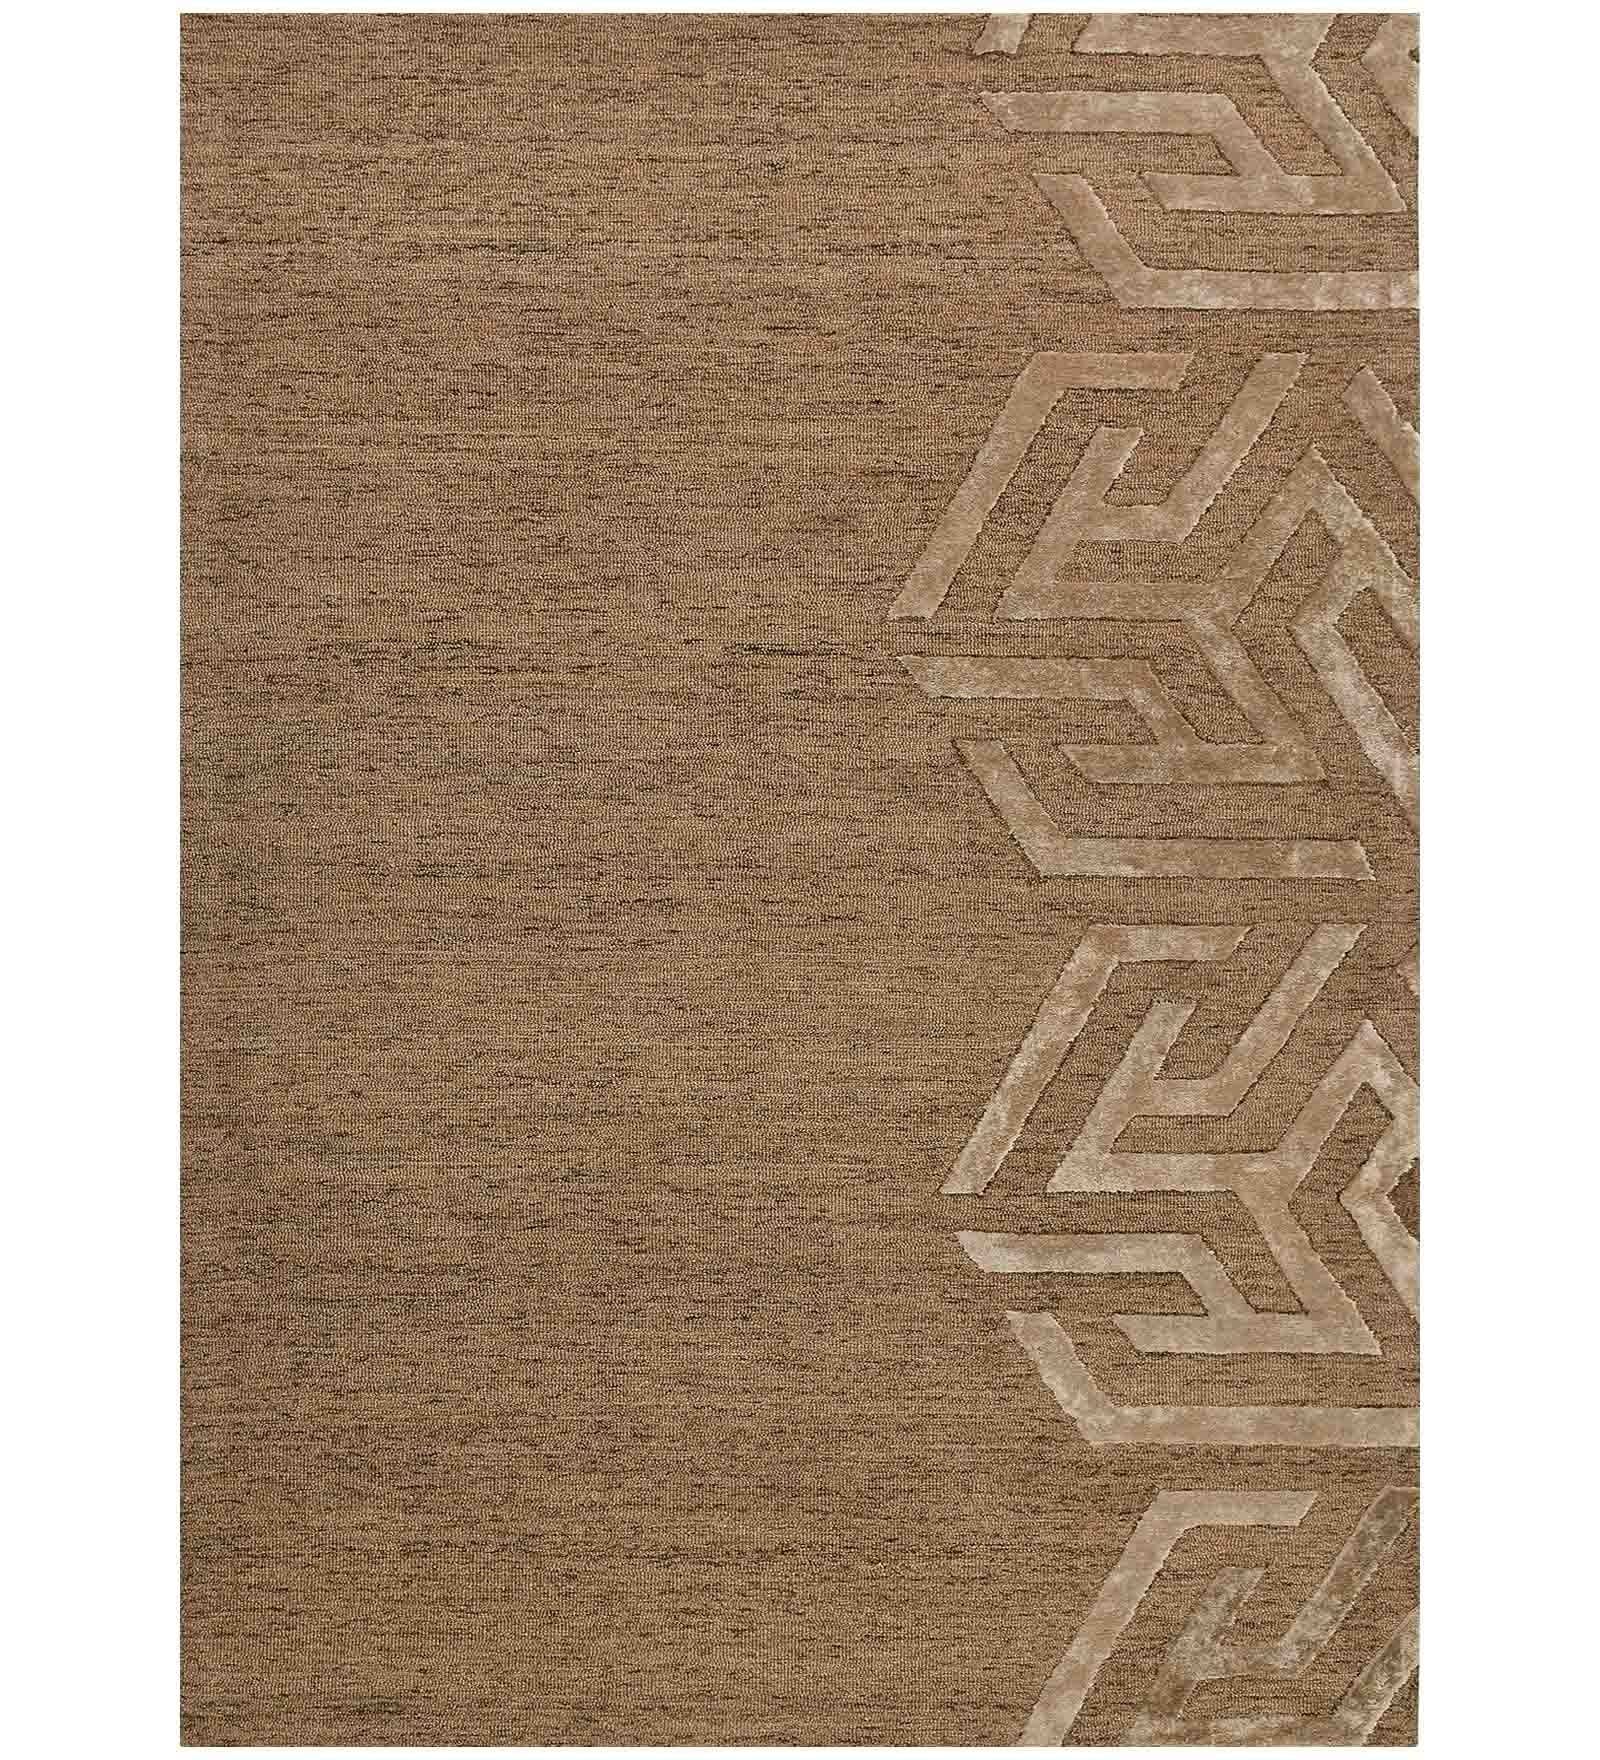 BROWN Wool & Viscose Canyan 4x6 Feet  Hand-Tufted Carpet - Rug